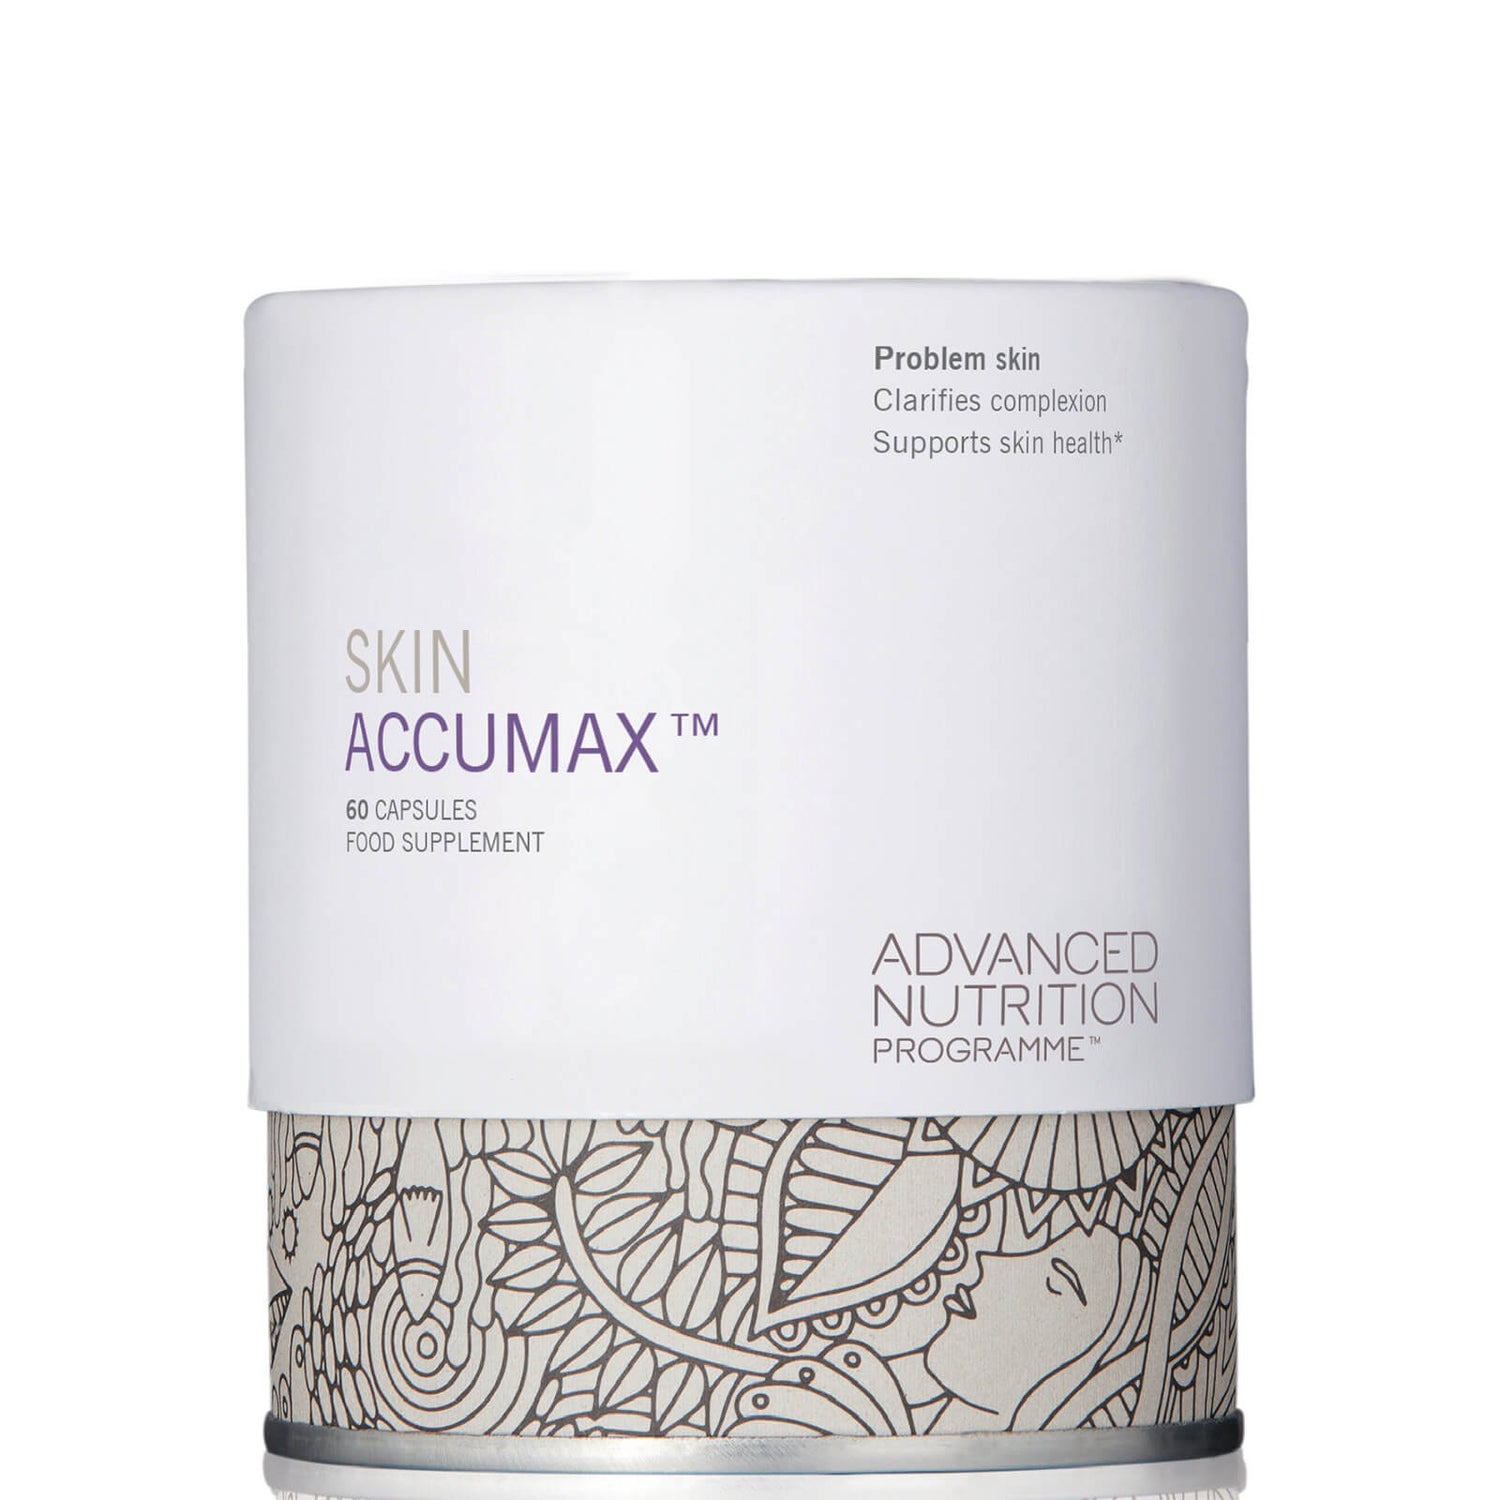 Advanced Nutrition Programme™ Skin Accumax™ - 60 Capsules